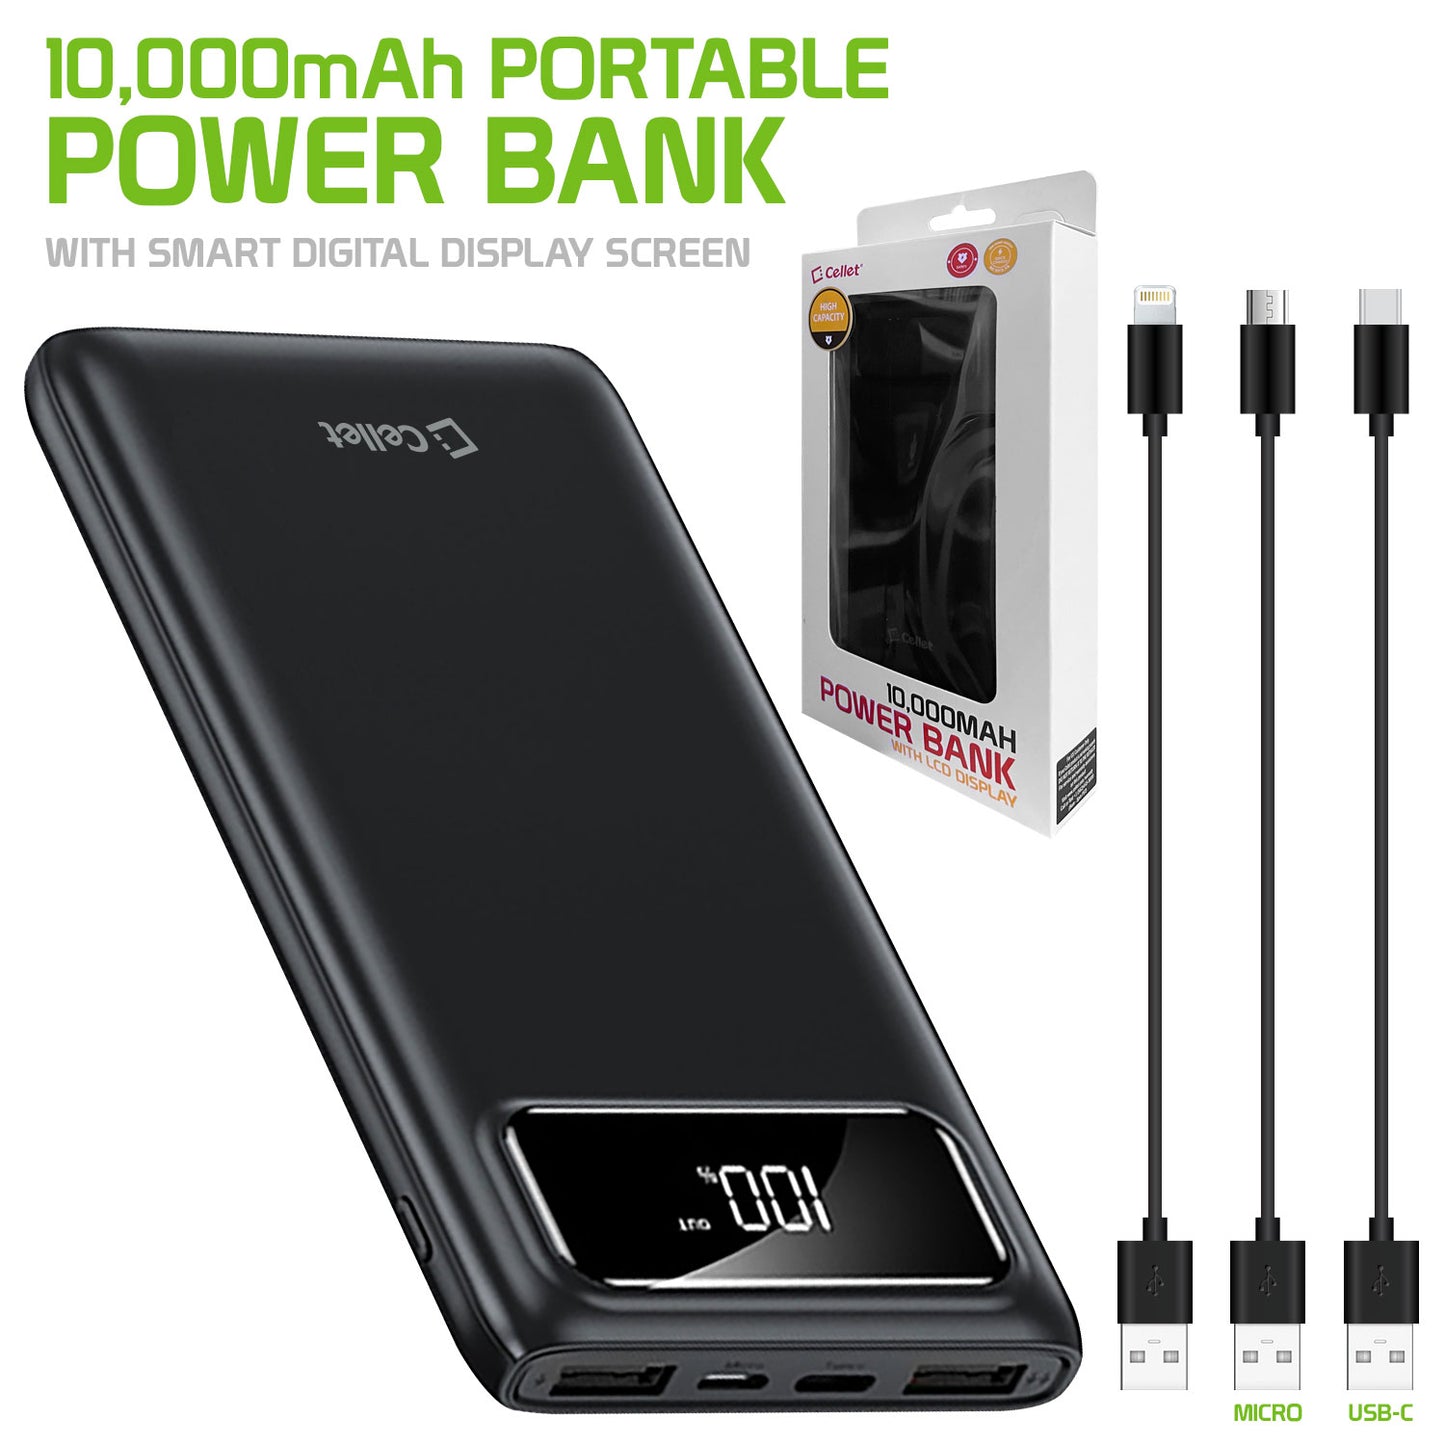 10,000mAh Portable Power Bank with Smart Digital Display Screen Compatible with iPhones Samsung Galaxy, Note, Motorola Moto, Google Pixel - Black